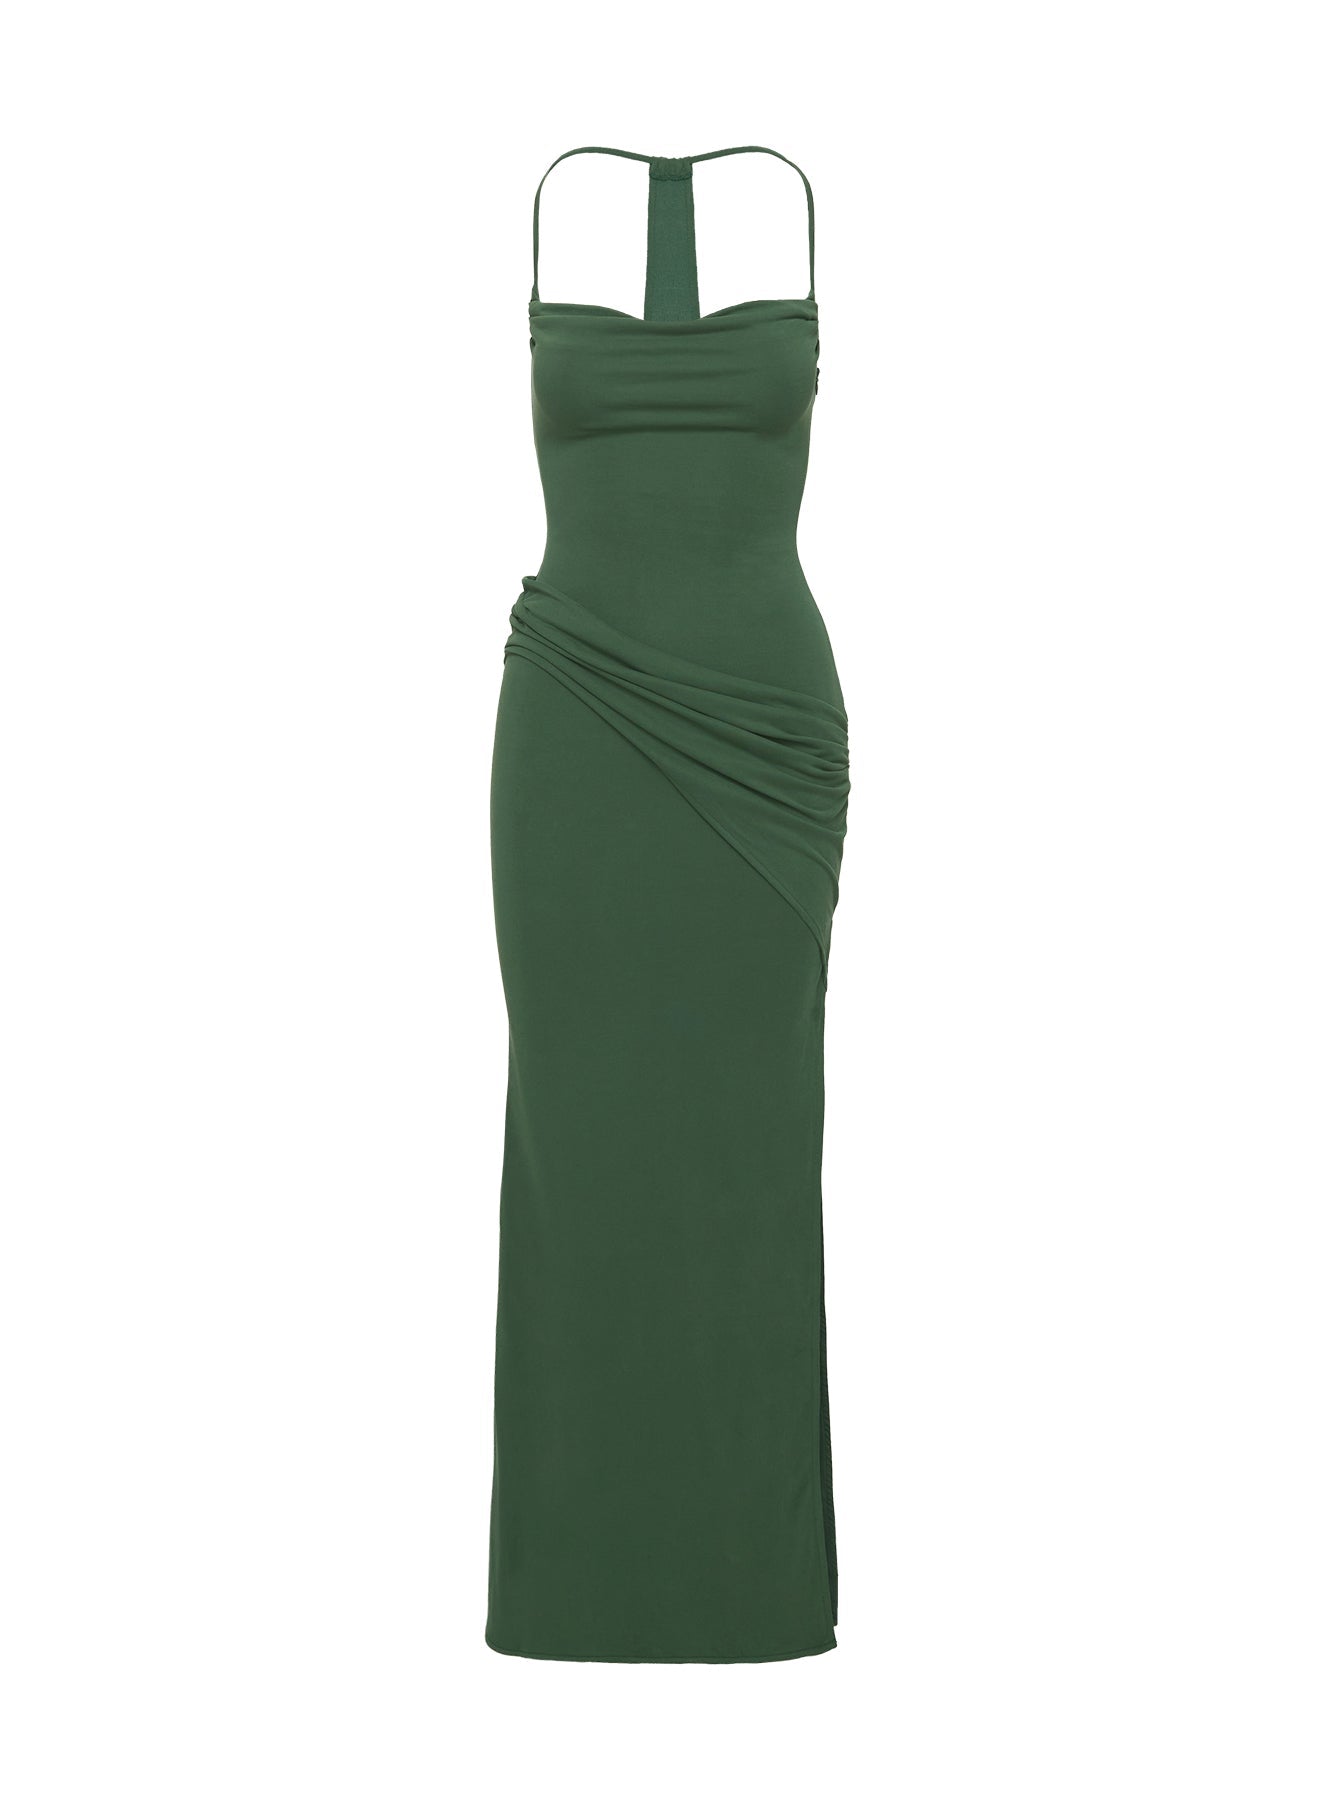 Shop Formal Dress - Marchesi Cupro Maxi Dress Green third image